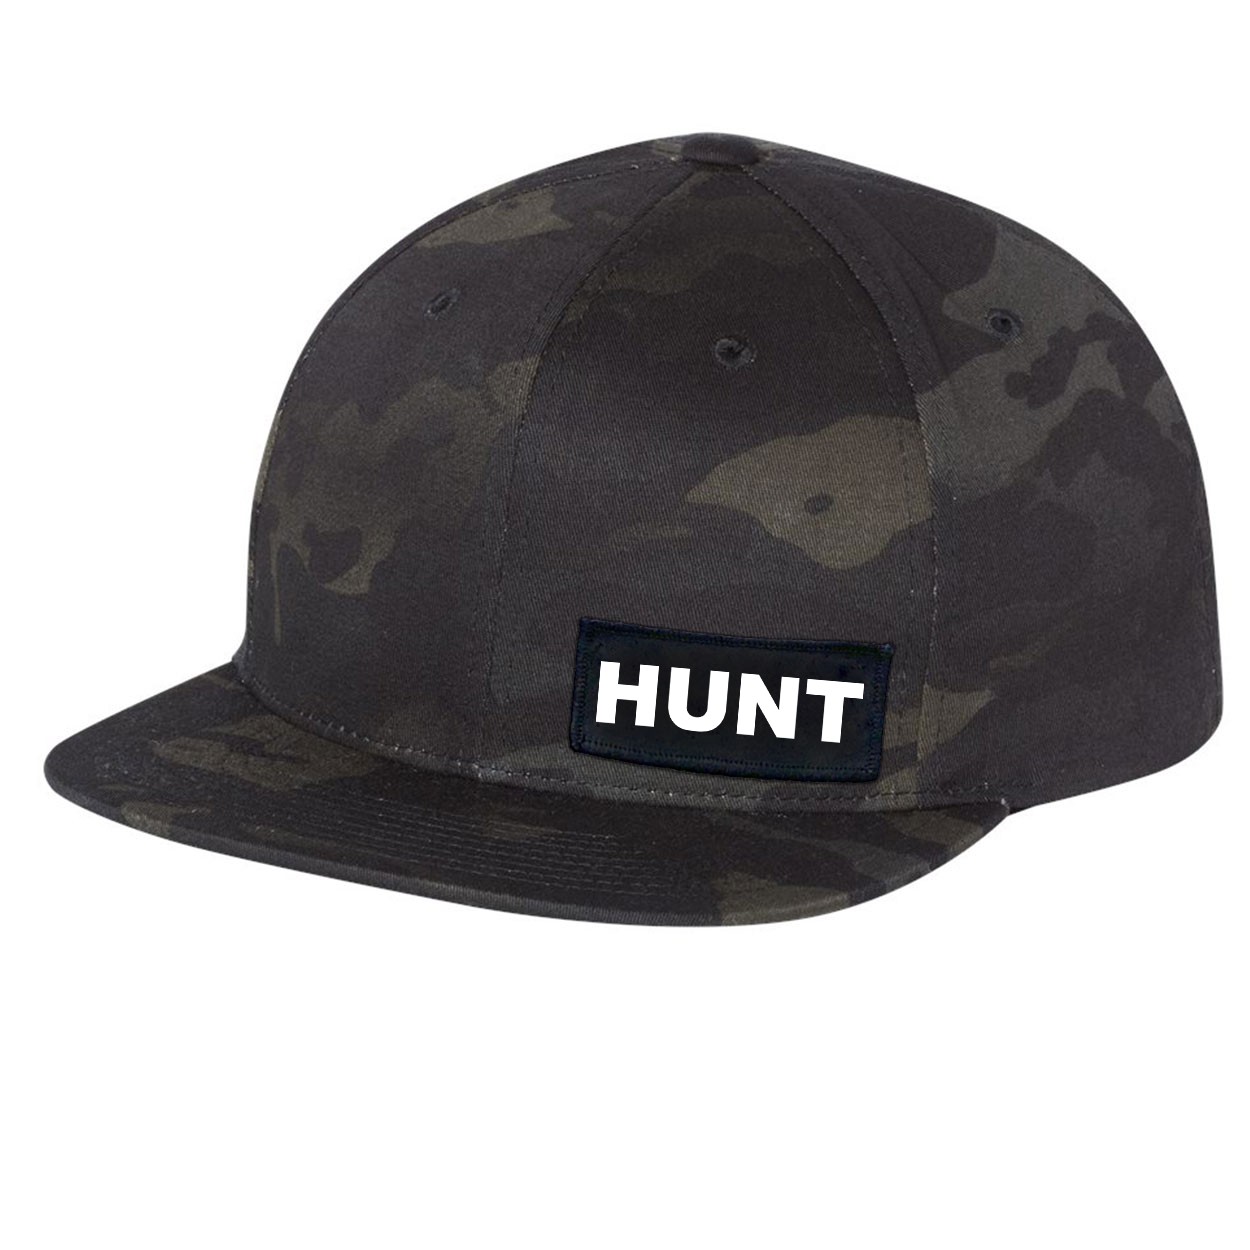 Hunt Brand Logo Night Out Woven Patch Flat Brim Snapback Hat Black Camo (White Logo)